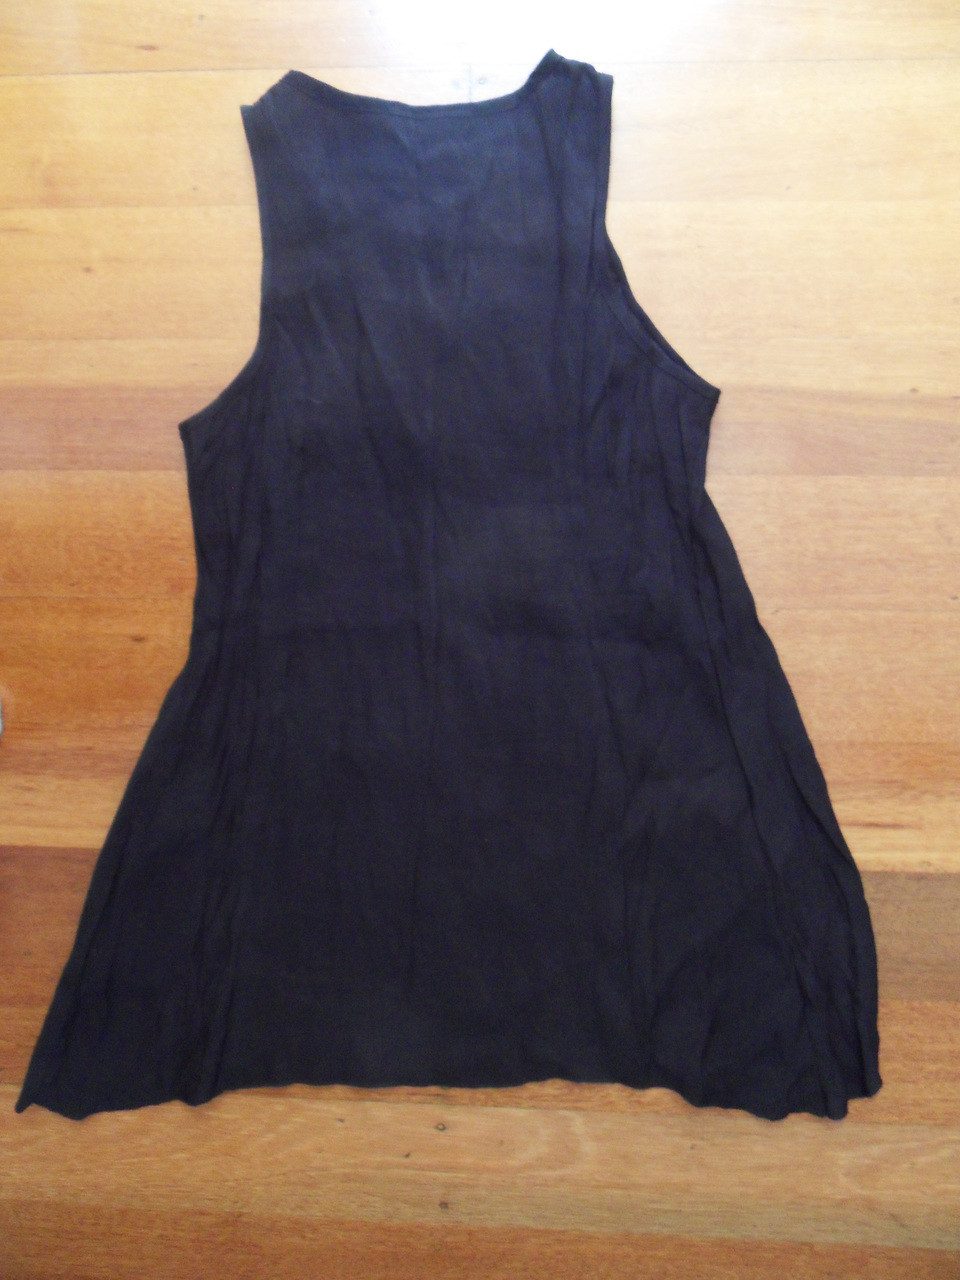 THE ARK black pintuck tunic dress size S MADE IN AUSTRALIA BNWT